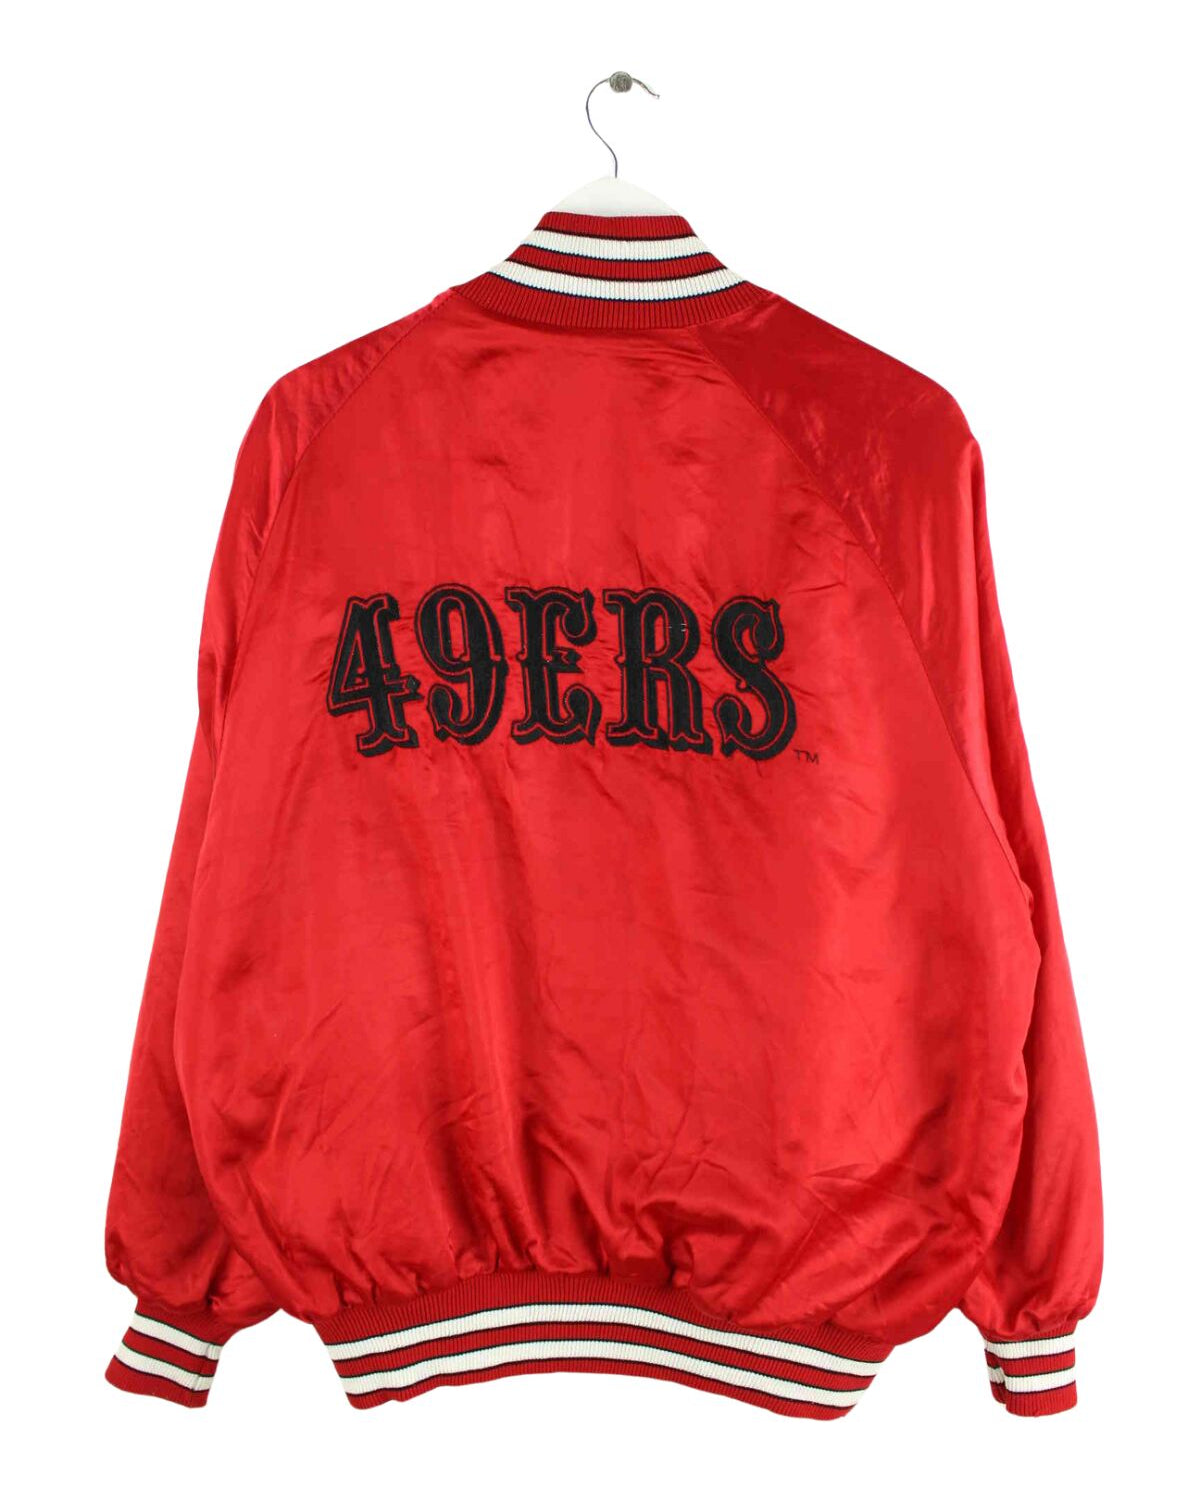 Vintage 80s San Francisco 49ers Embroidered Jacke Rot M (back image)